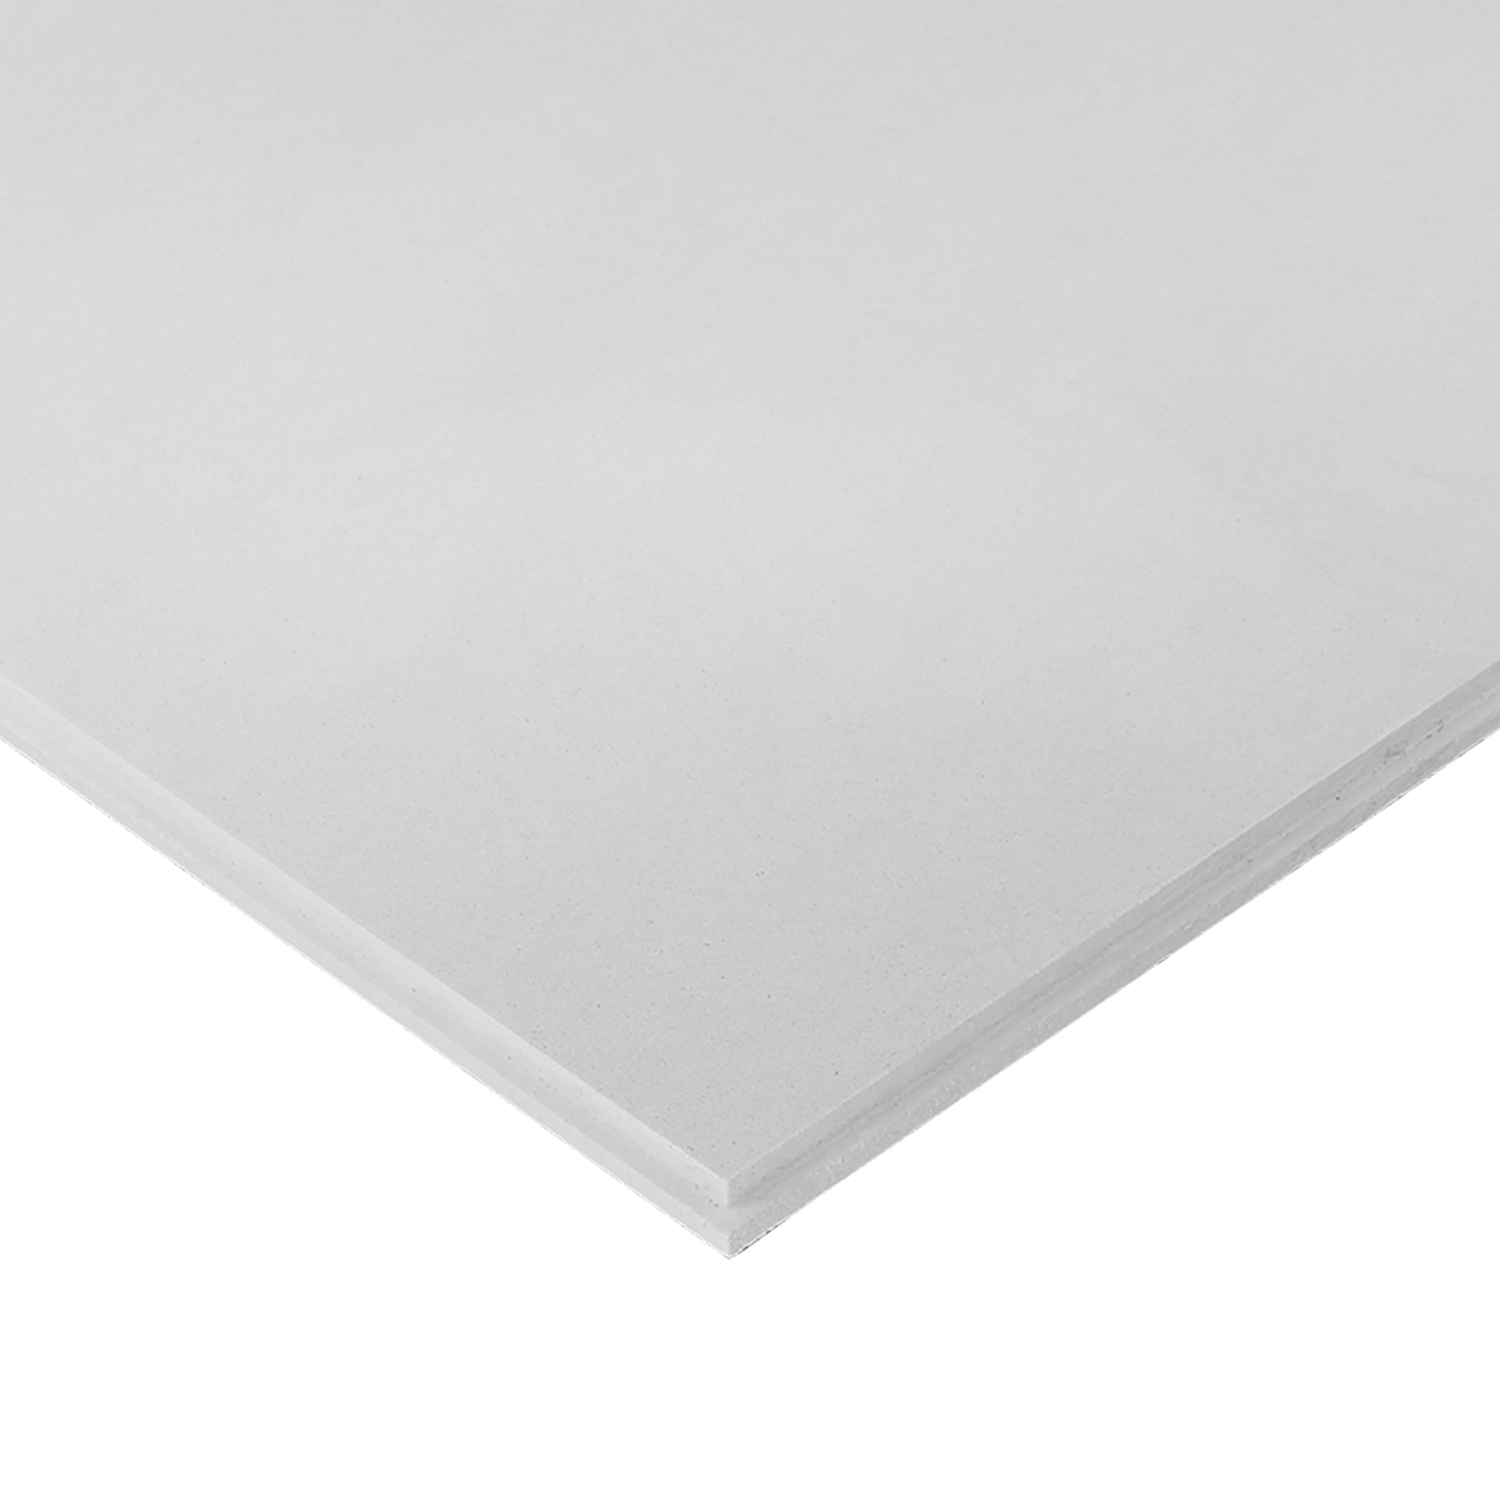 ROCKFON ARTIC Tegular (24mm grid) Ceiling Tiles 600mm X 600mm (Box Qty:16)